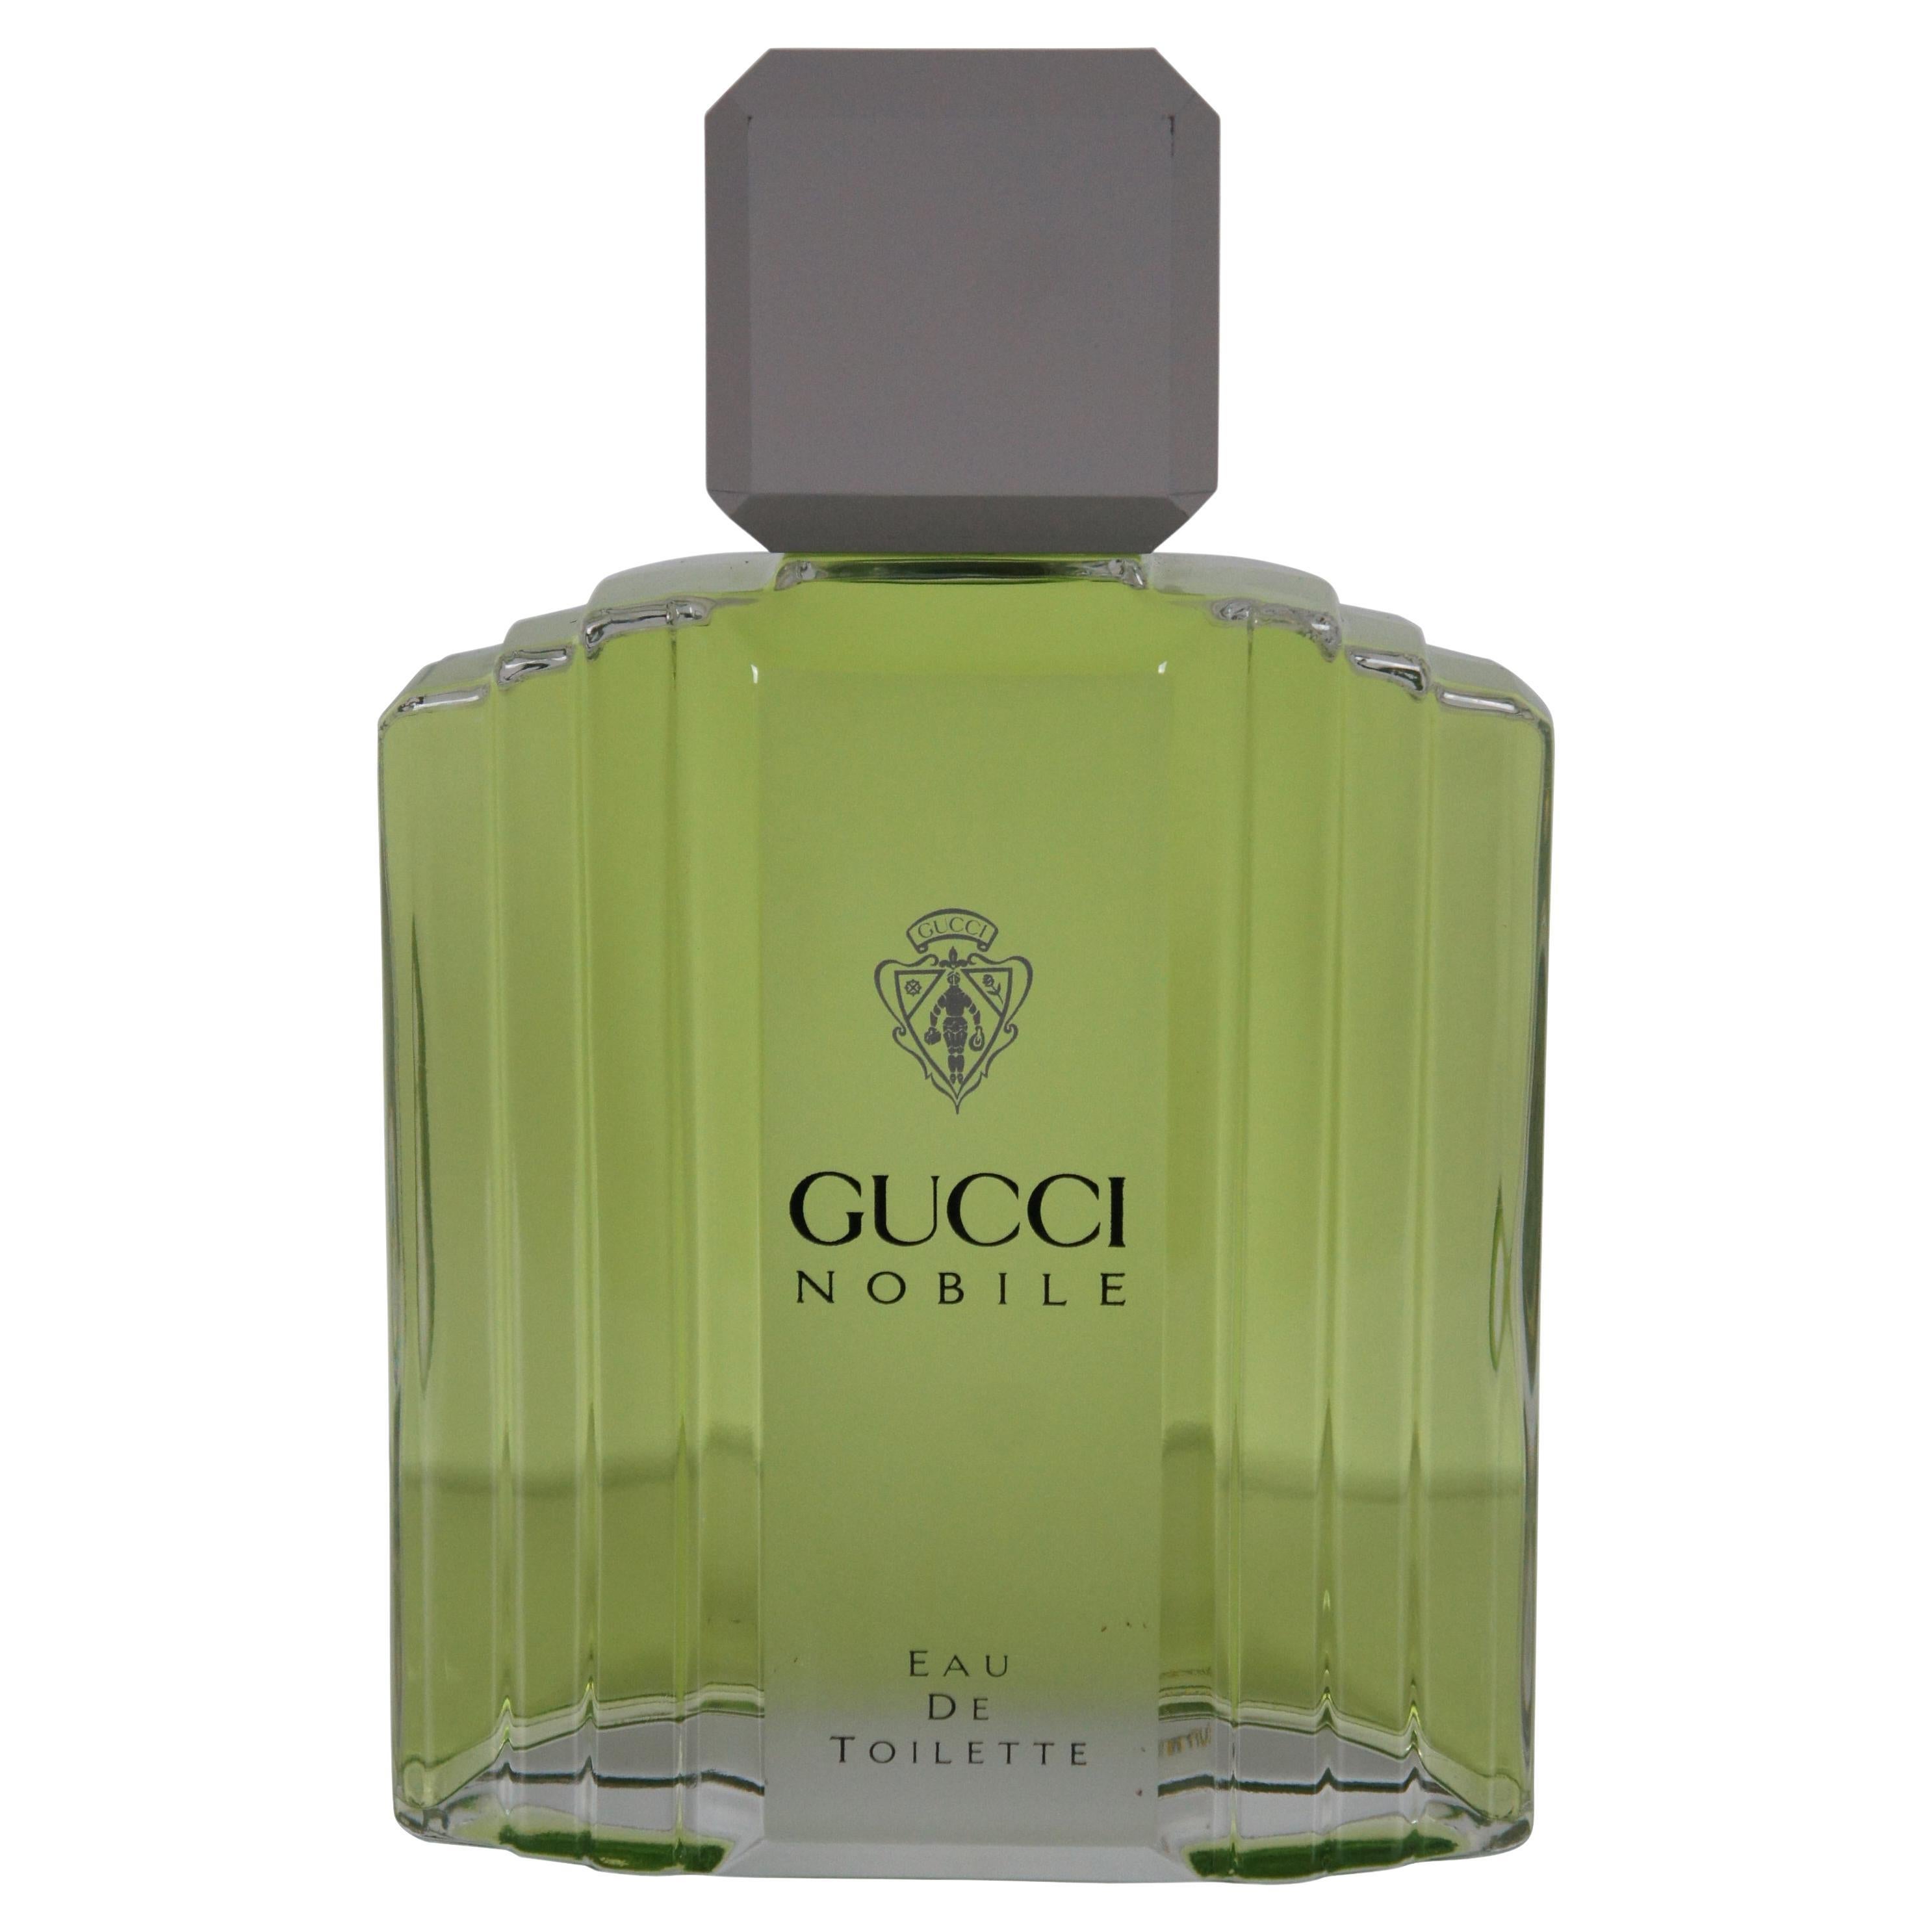 Gucci Nobile Eau Toilette Factice Dummy Cologne Perfume Bottle Store Display For Sale